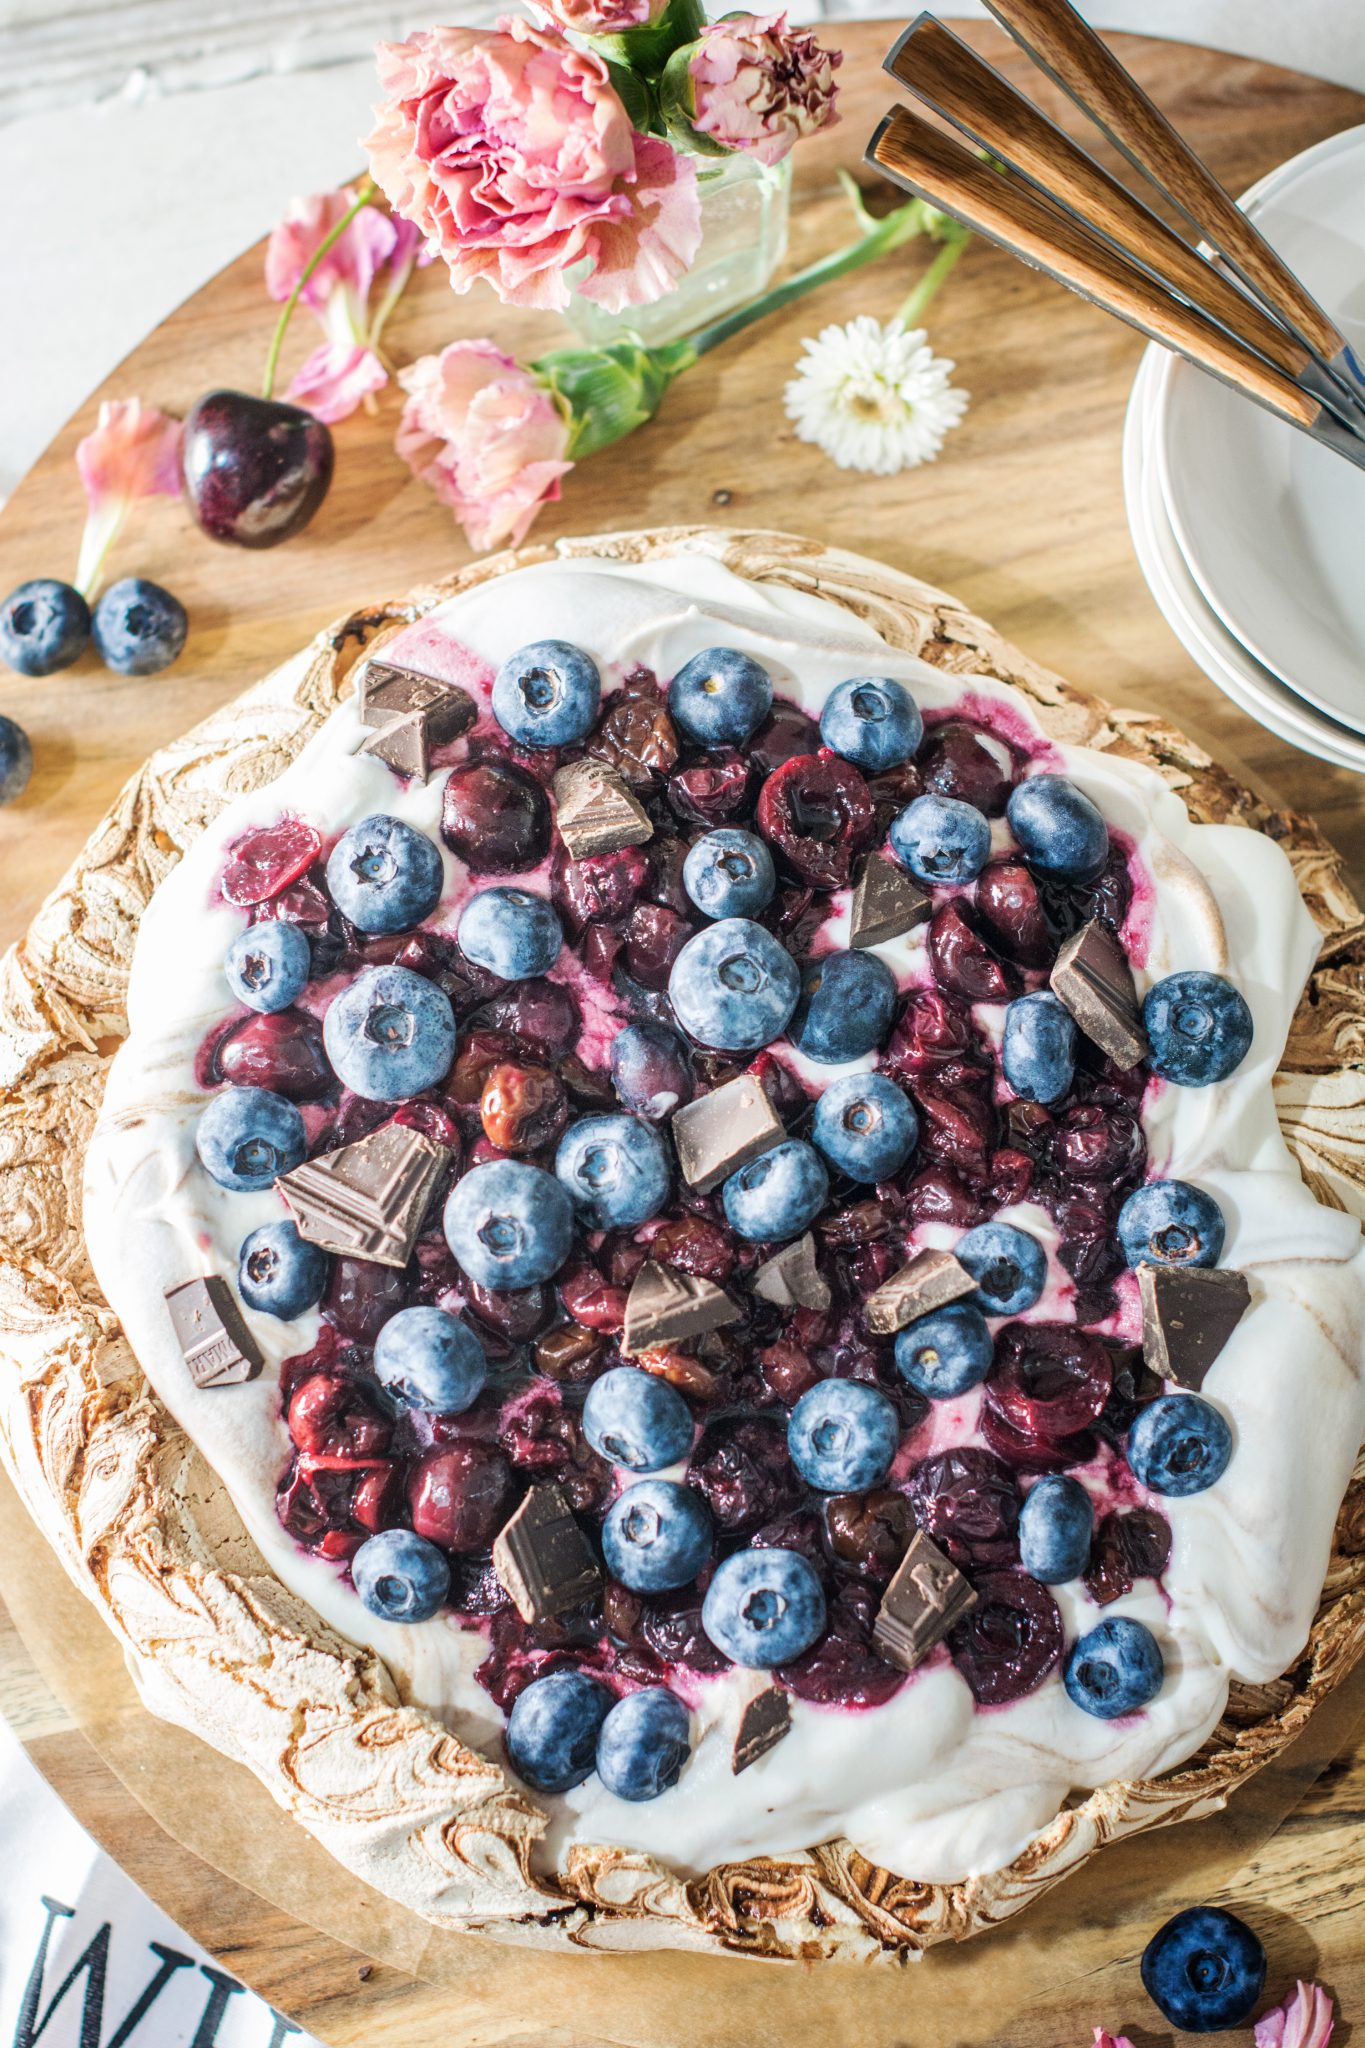 Chocolate Pavlova with Cherries and Blueberries. Get the Recipe at Little Figgy Food. @WorldMarket # #worldmarkettribe #ad